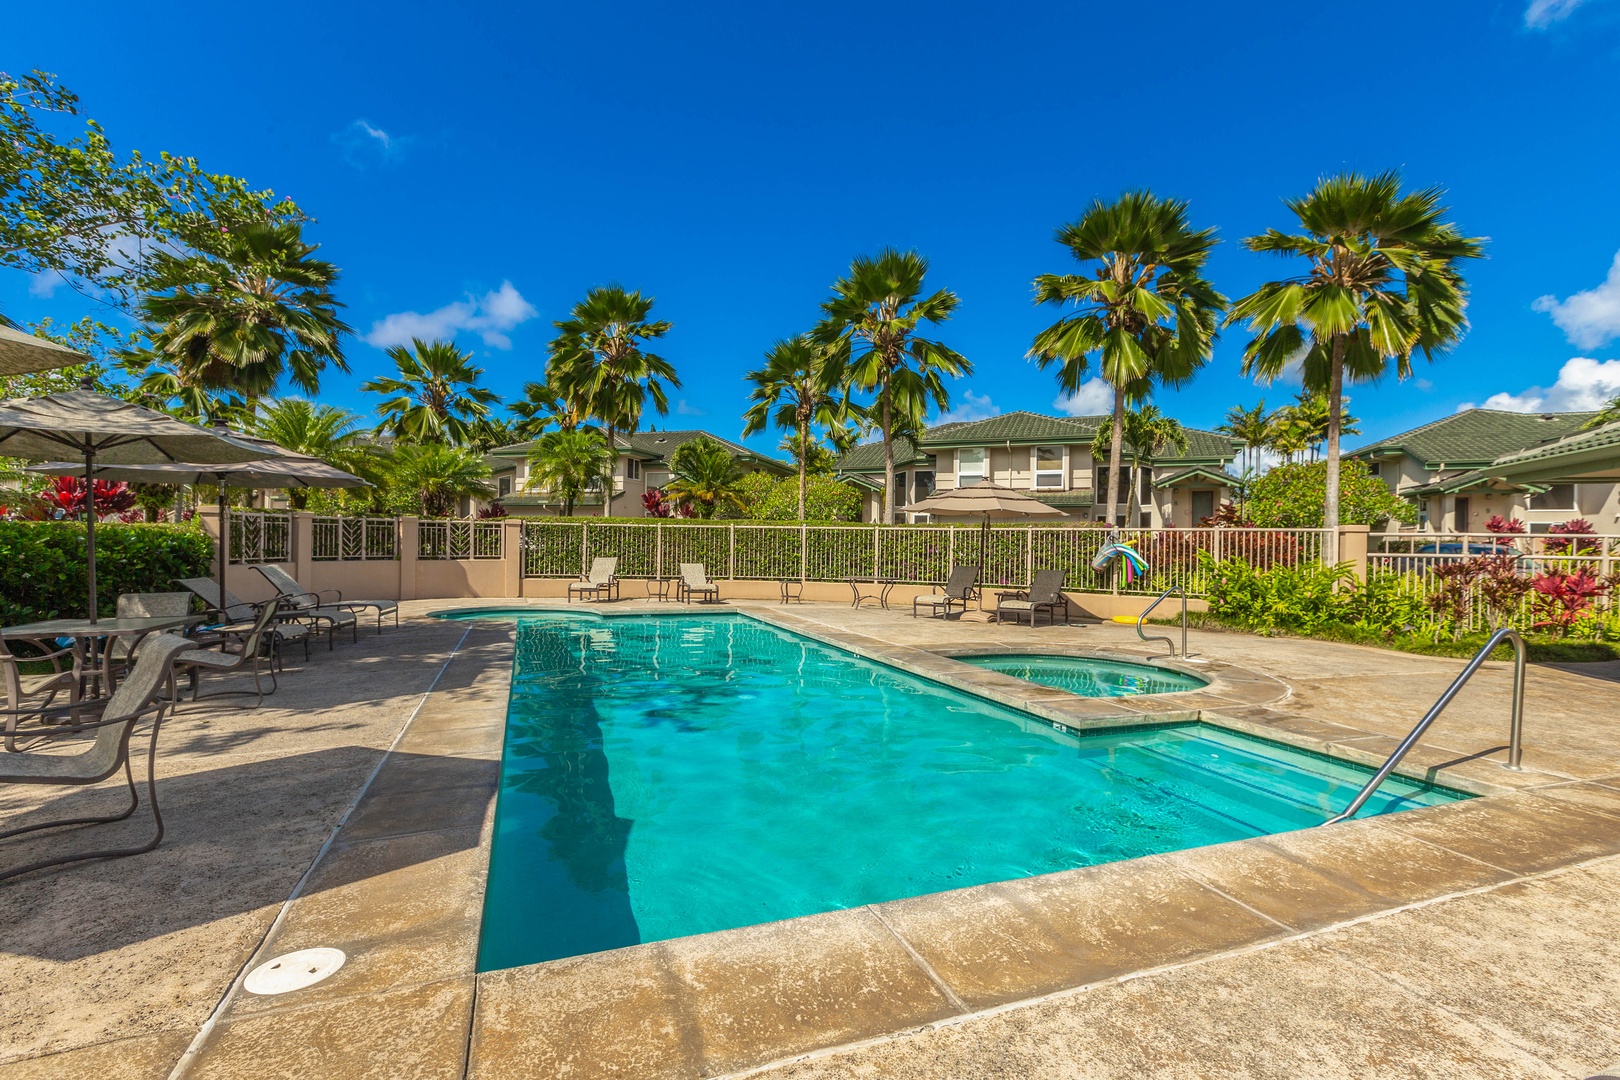 Princeville Vacation Rentals, Nohea Villa - Shared pool